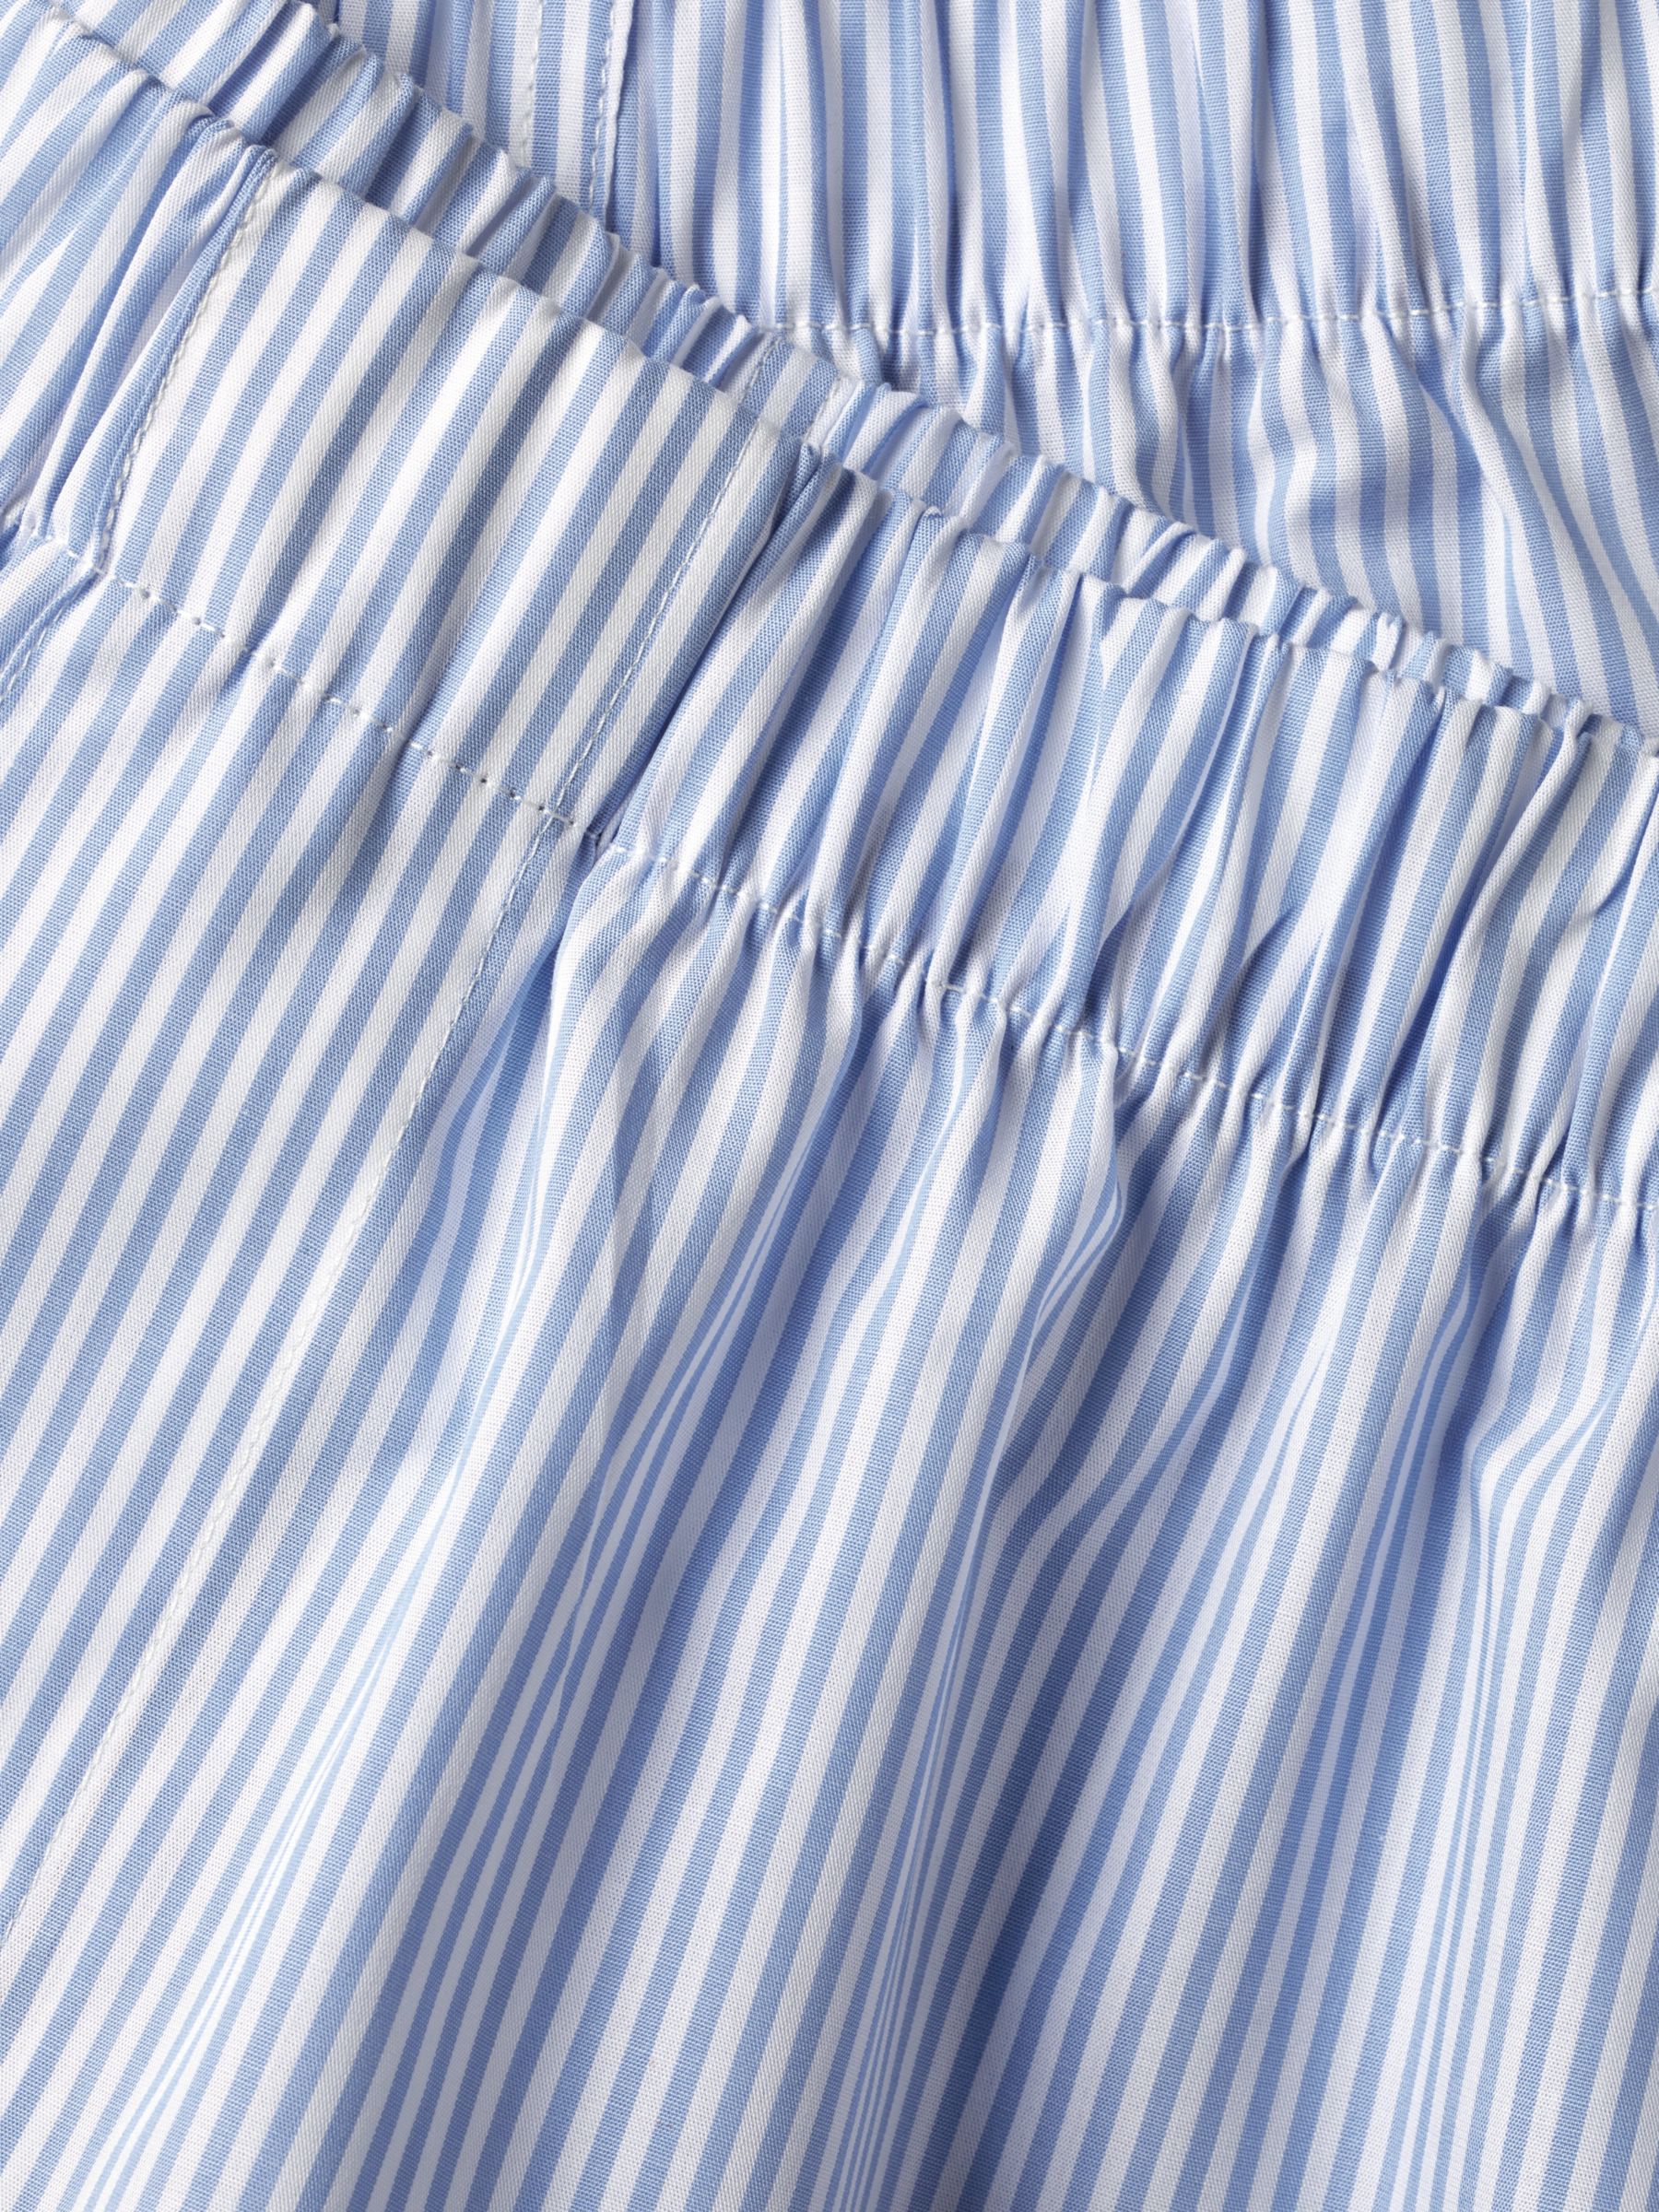 Charles Tyrwhitt Stripe Print Cotton Boxer Shorts, Cornflower Blue, S